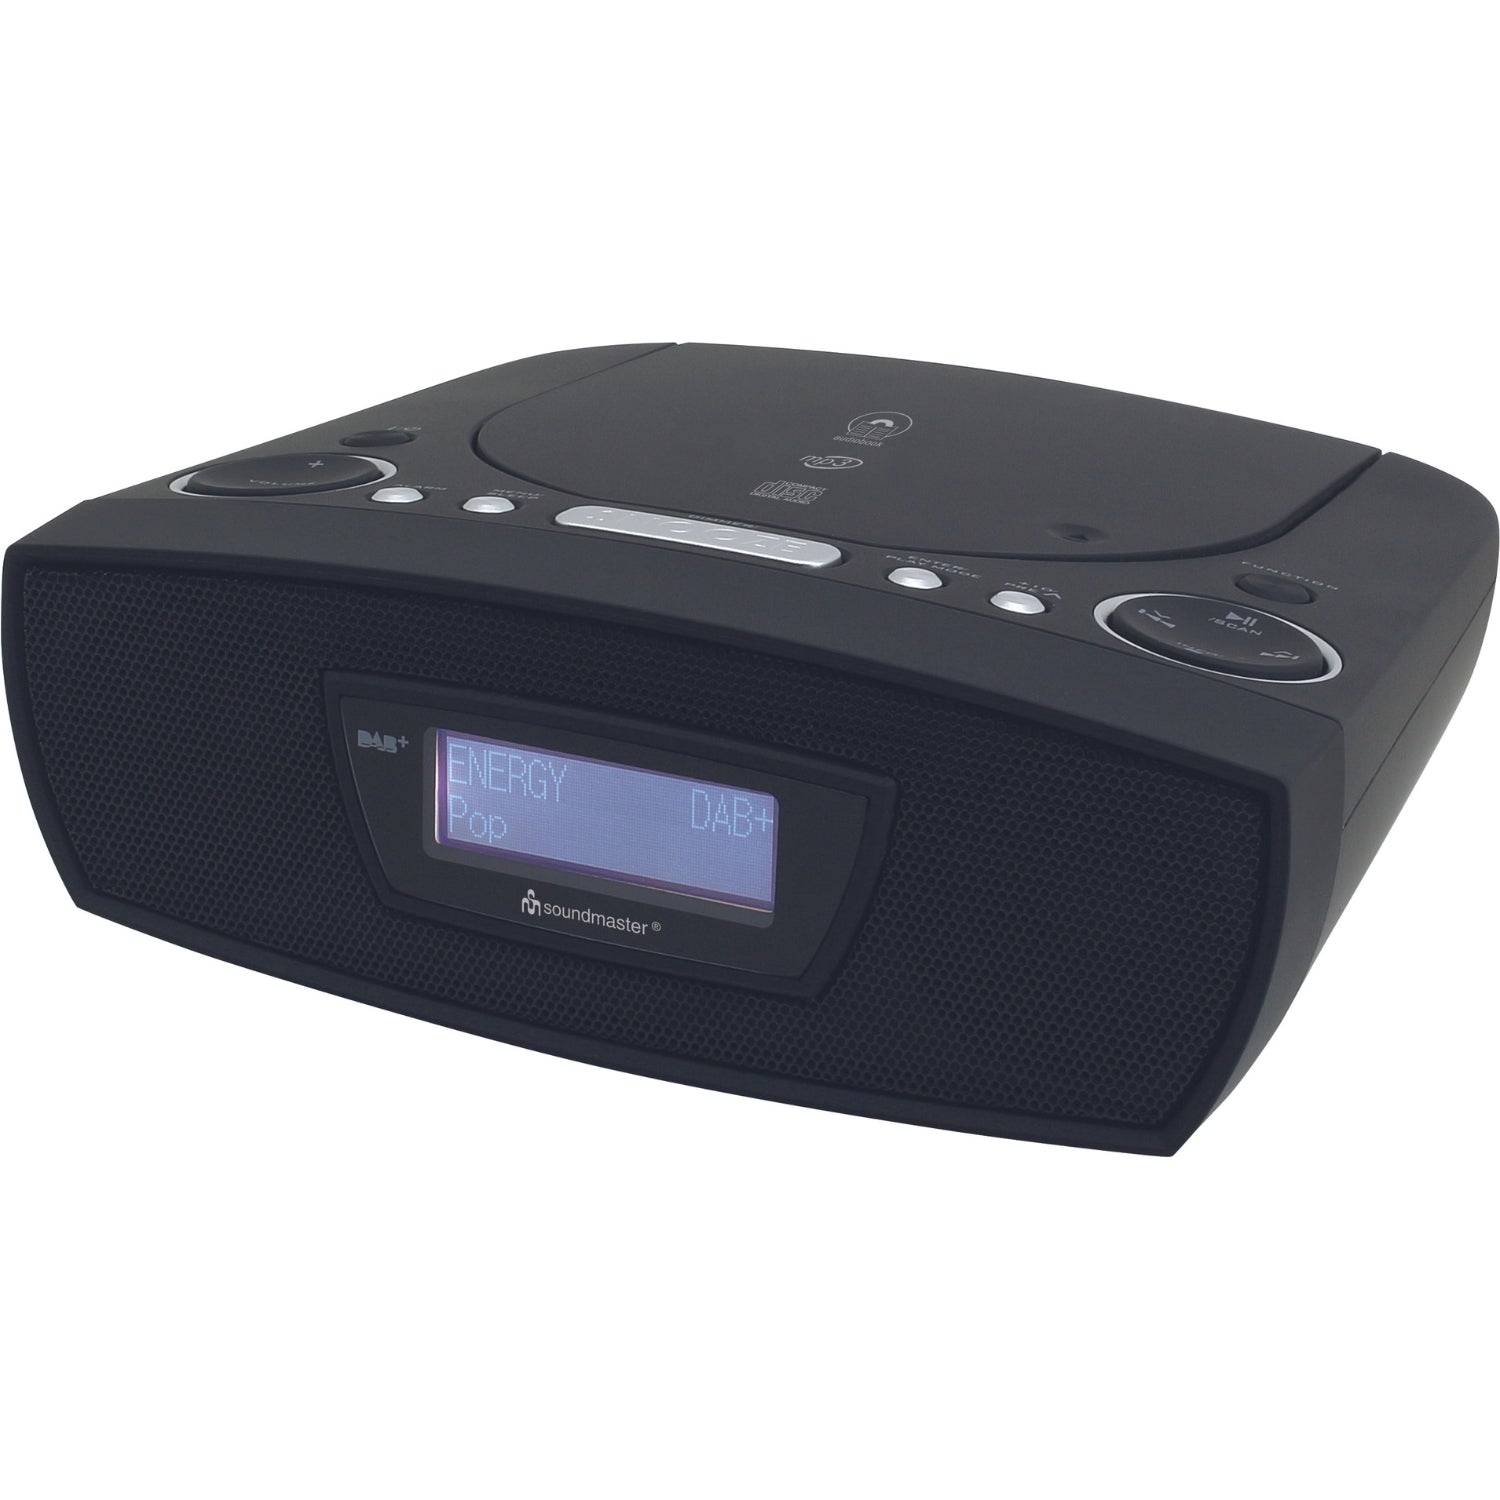 Soundmaster URD480SW DAB+/UKW Digitaluhrenradio mit CD/MP3/Resume Funktion und USB